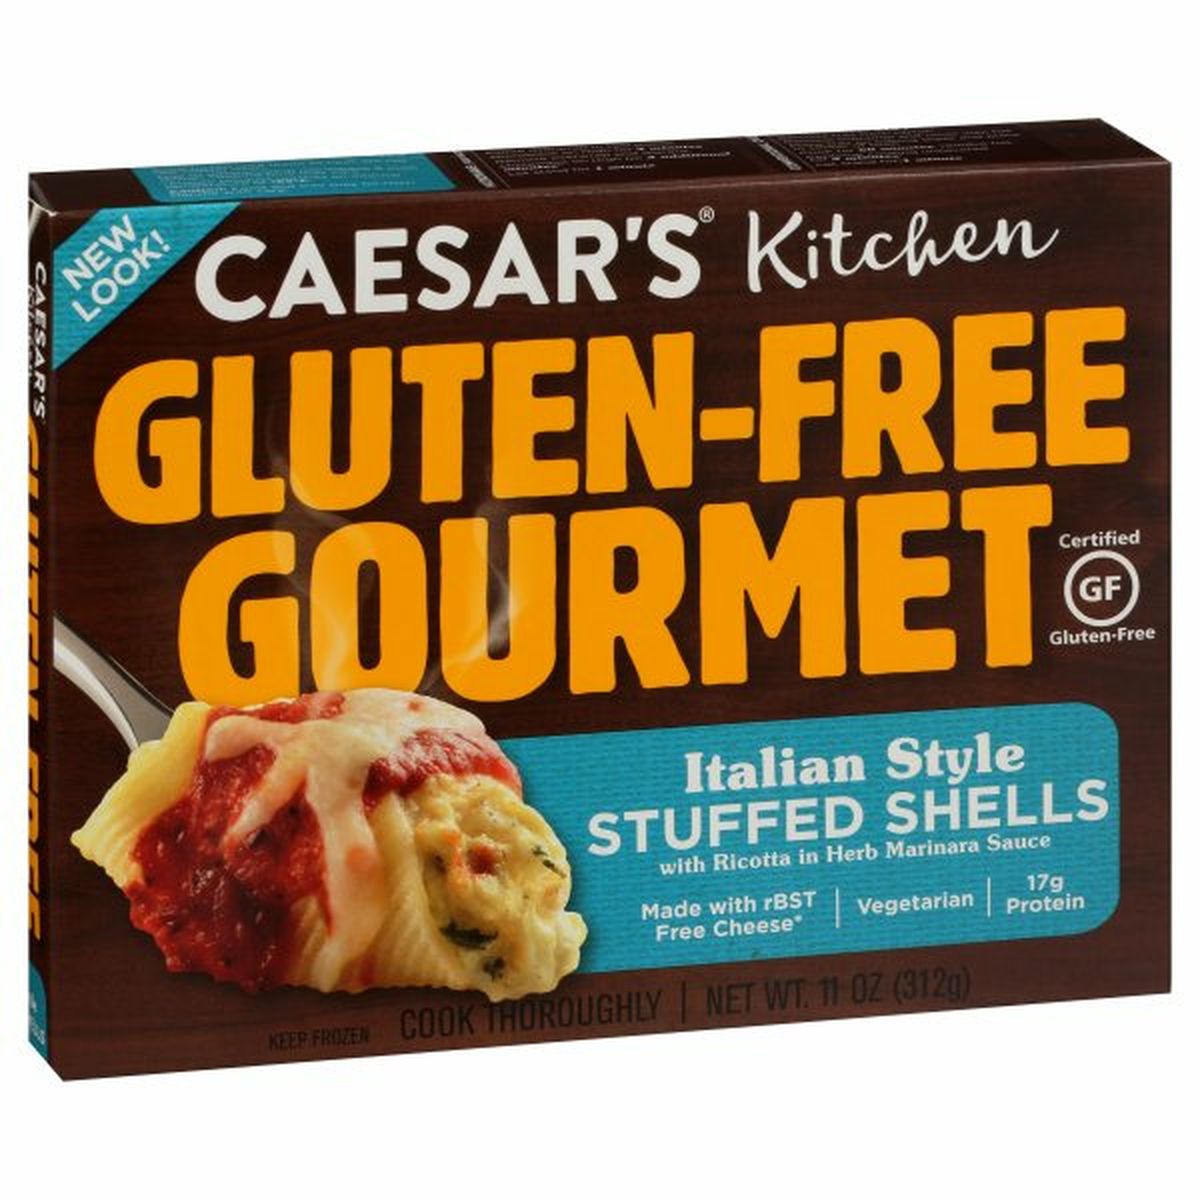 Calories in Caesars Kitchen Stuffed Shells, Gluten-Free Gourmet, Italian Style